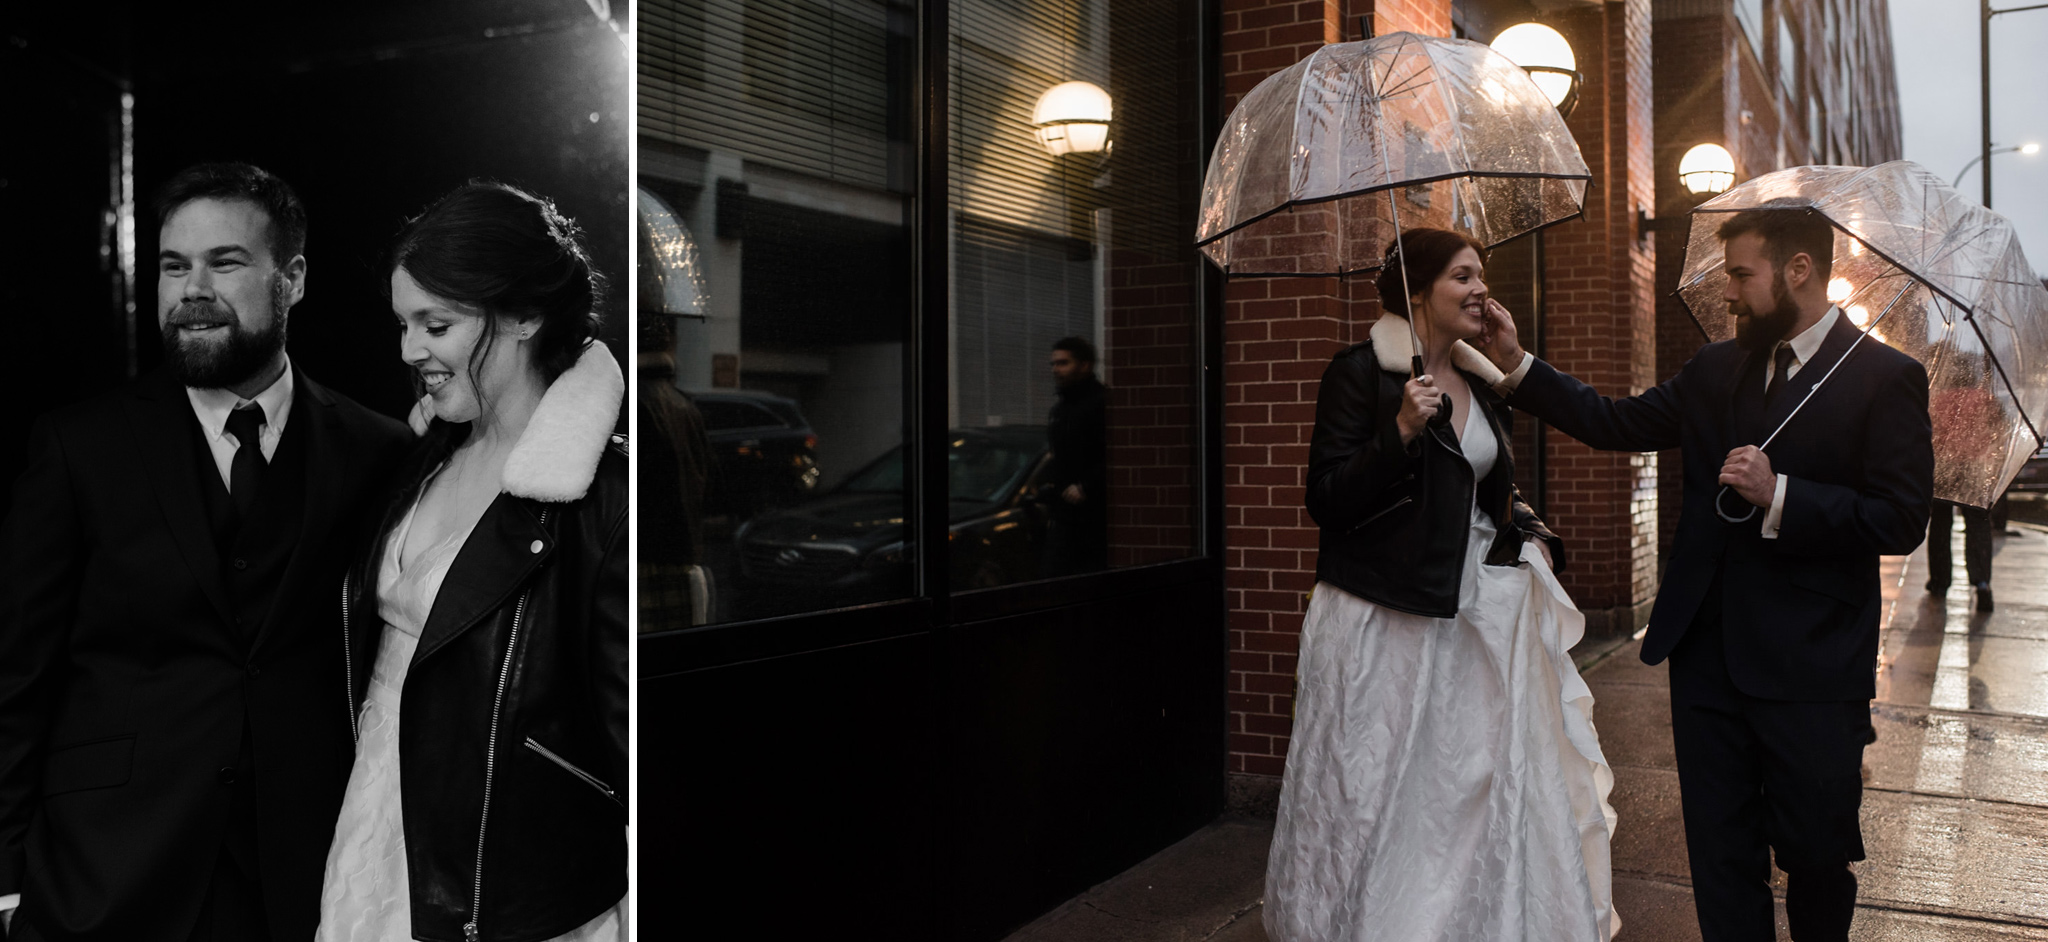 126-rainy-day-wedding-toronto-wedding-photographer-clear-umbrellas.jpg